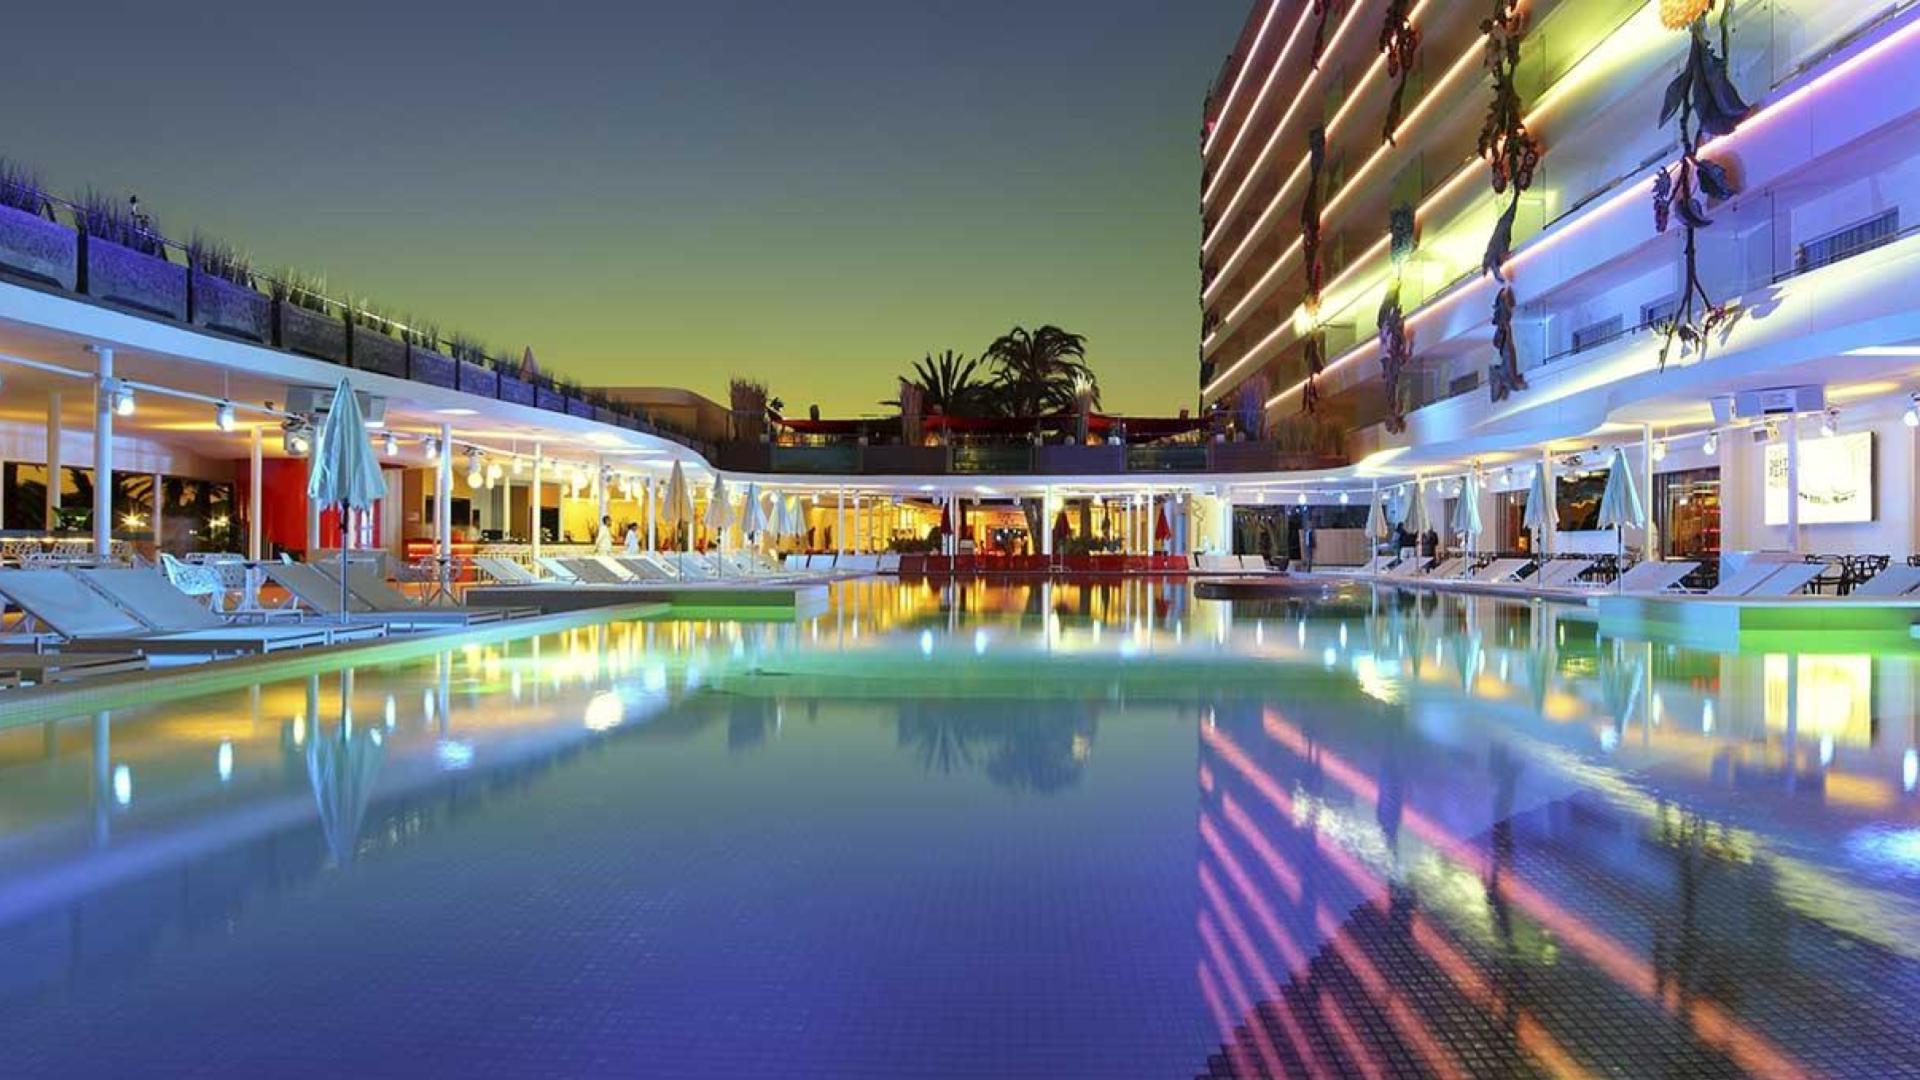 Palladium Hotel image of a pool 